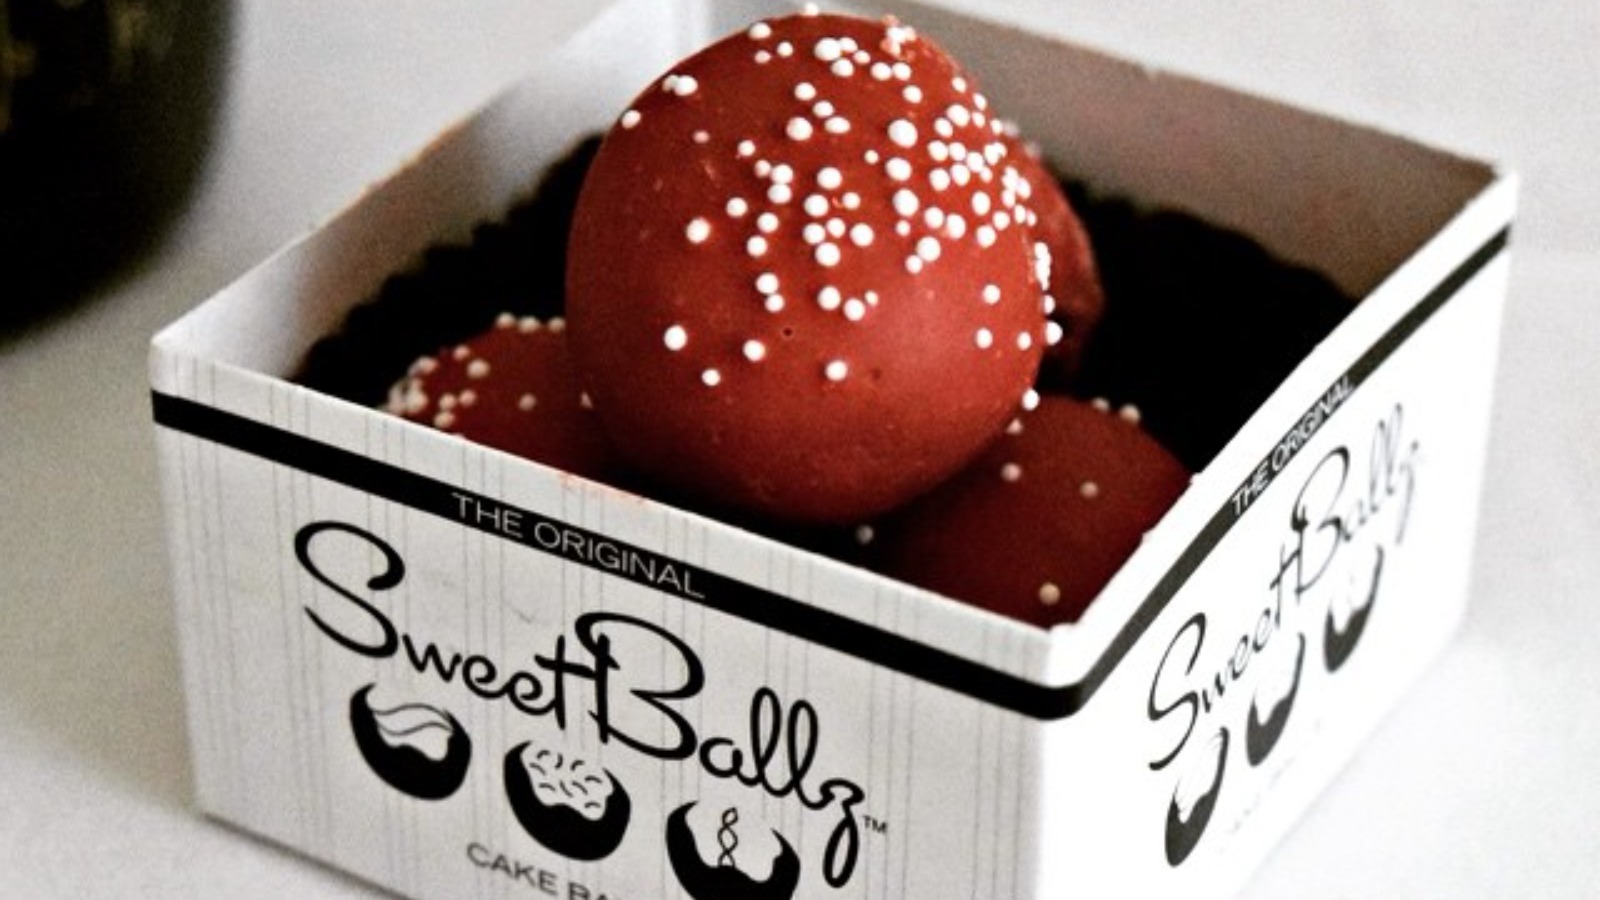 Sweet ballz cake balls